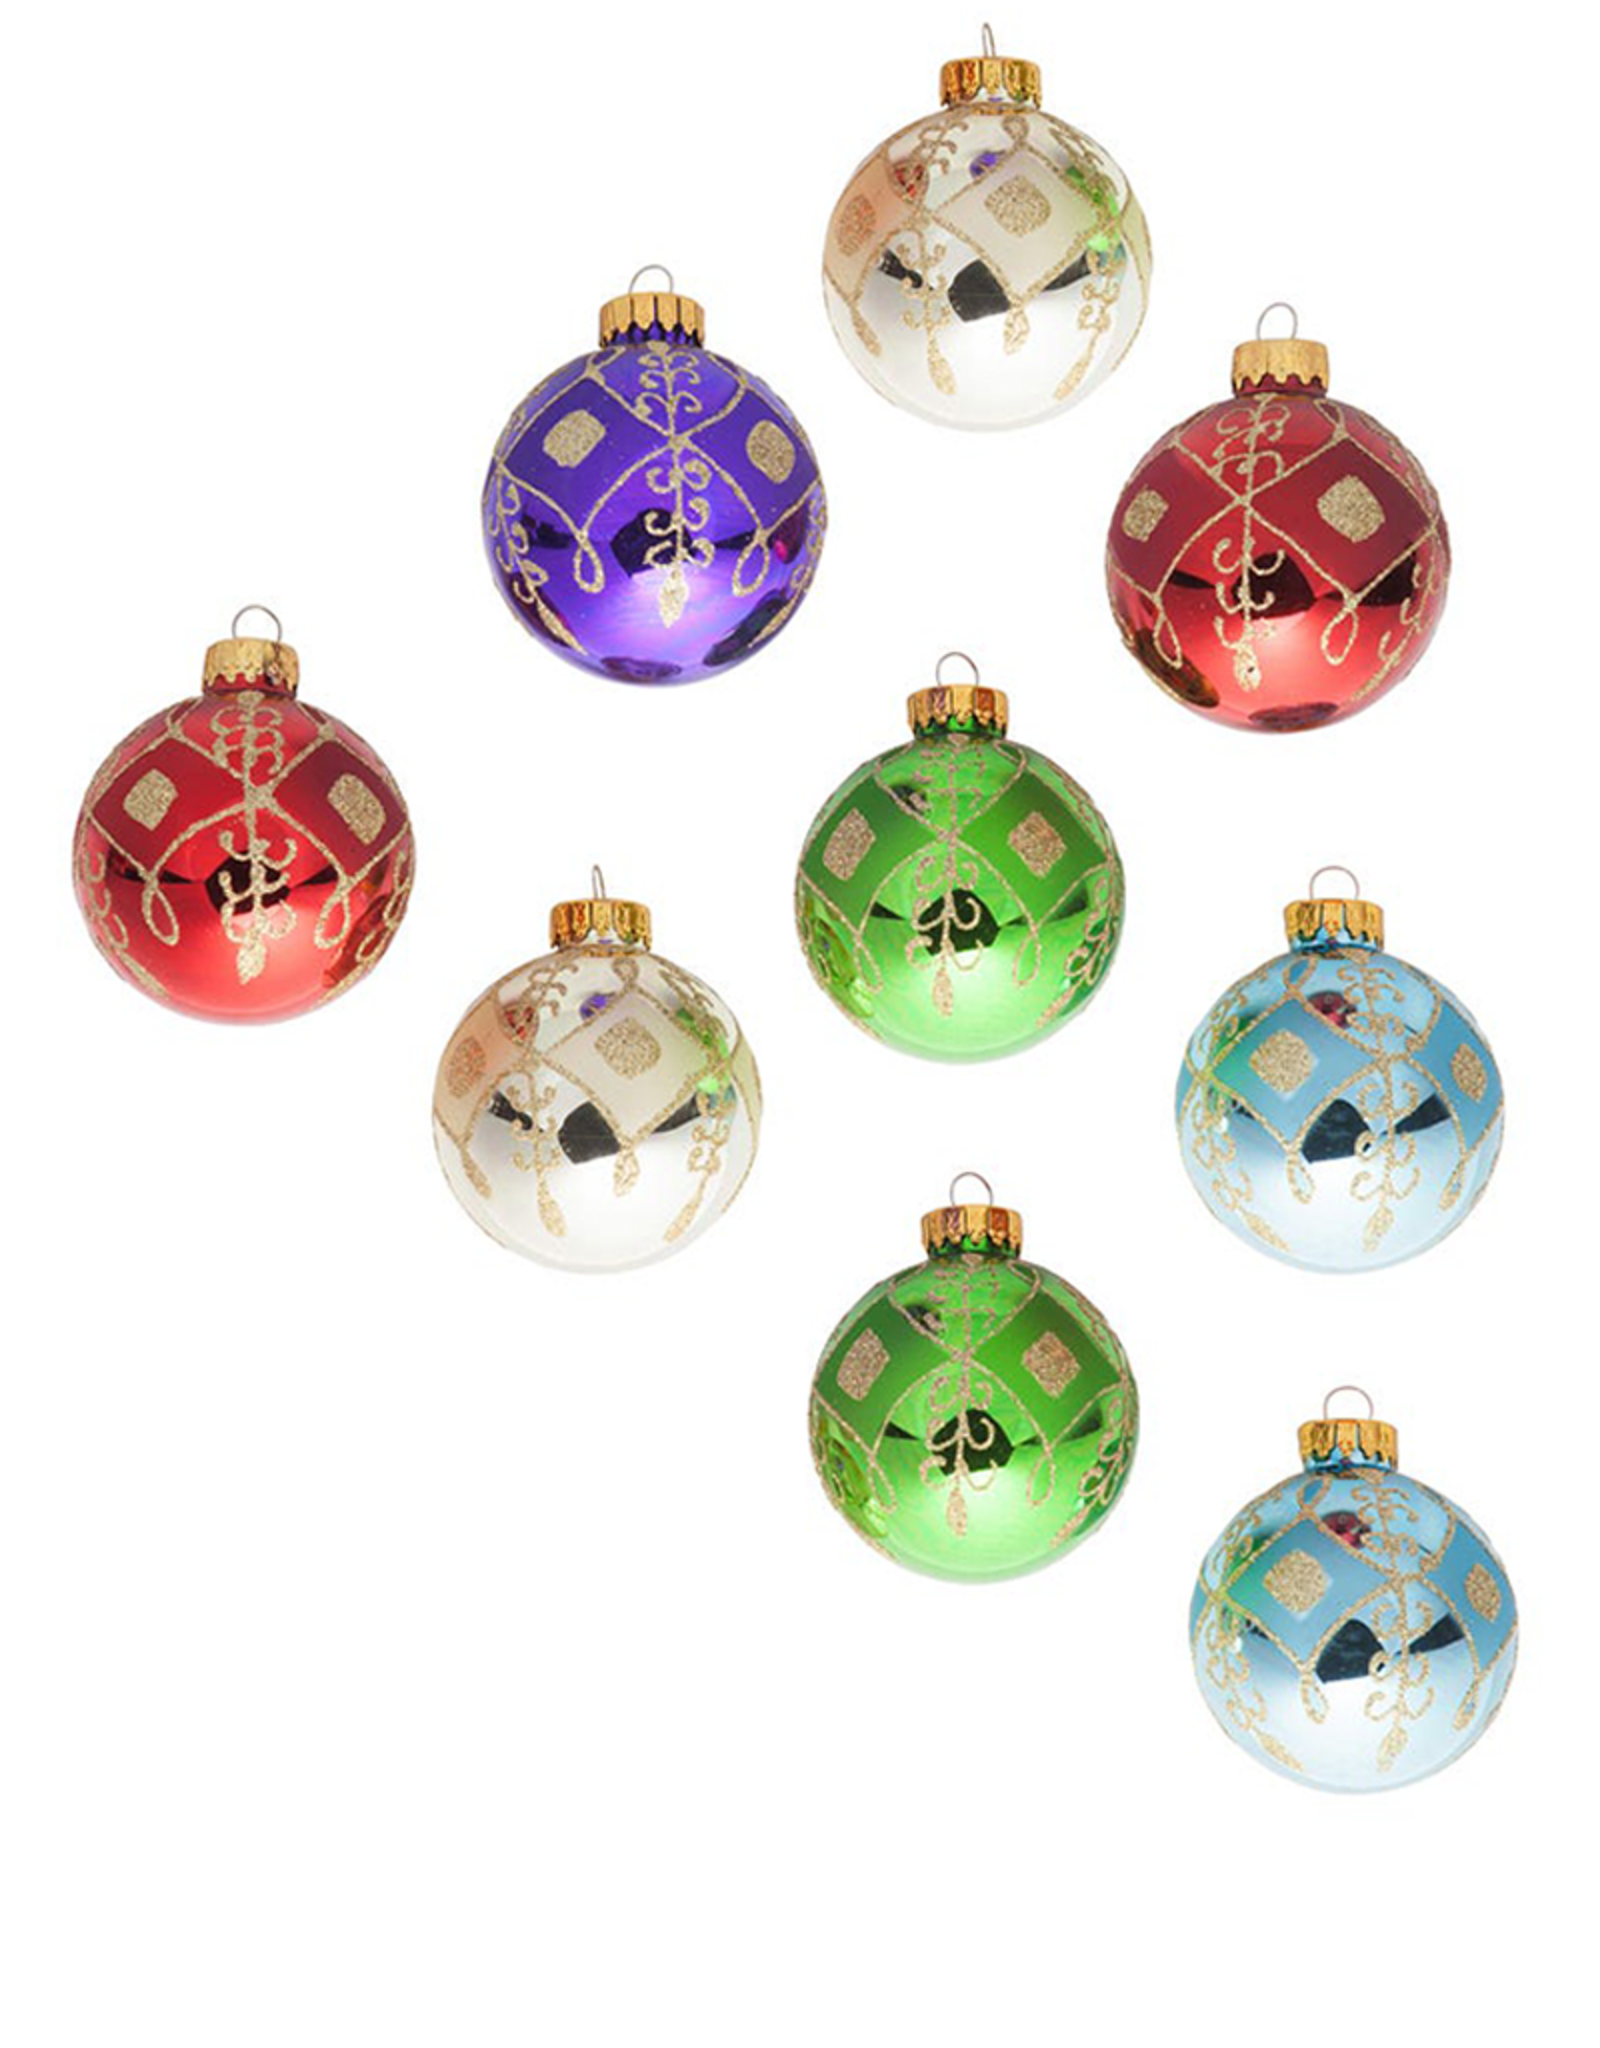 Kurt Adler Multicolor Glass Ball Ornaments 45MM Set Of 9